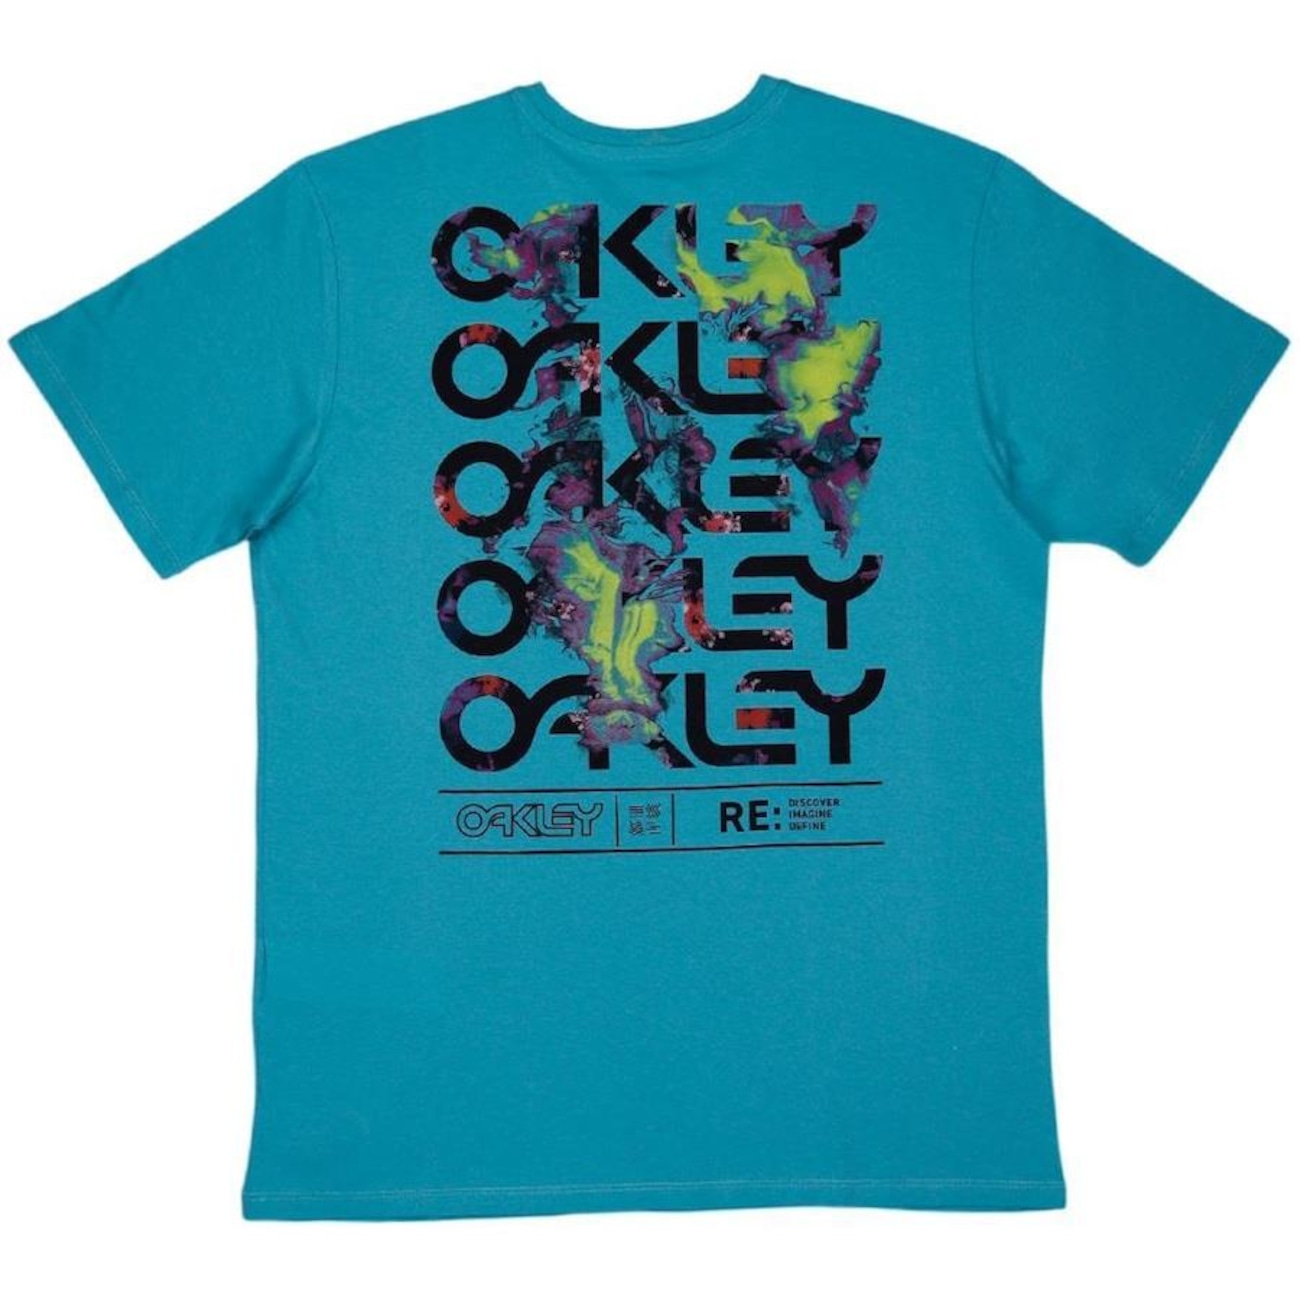 Camiseta Oakley Jellyfish Graphic - Camiseta Oakley Jellyfish Graphic -  Oakley